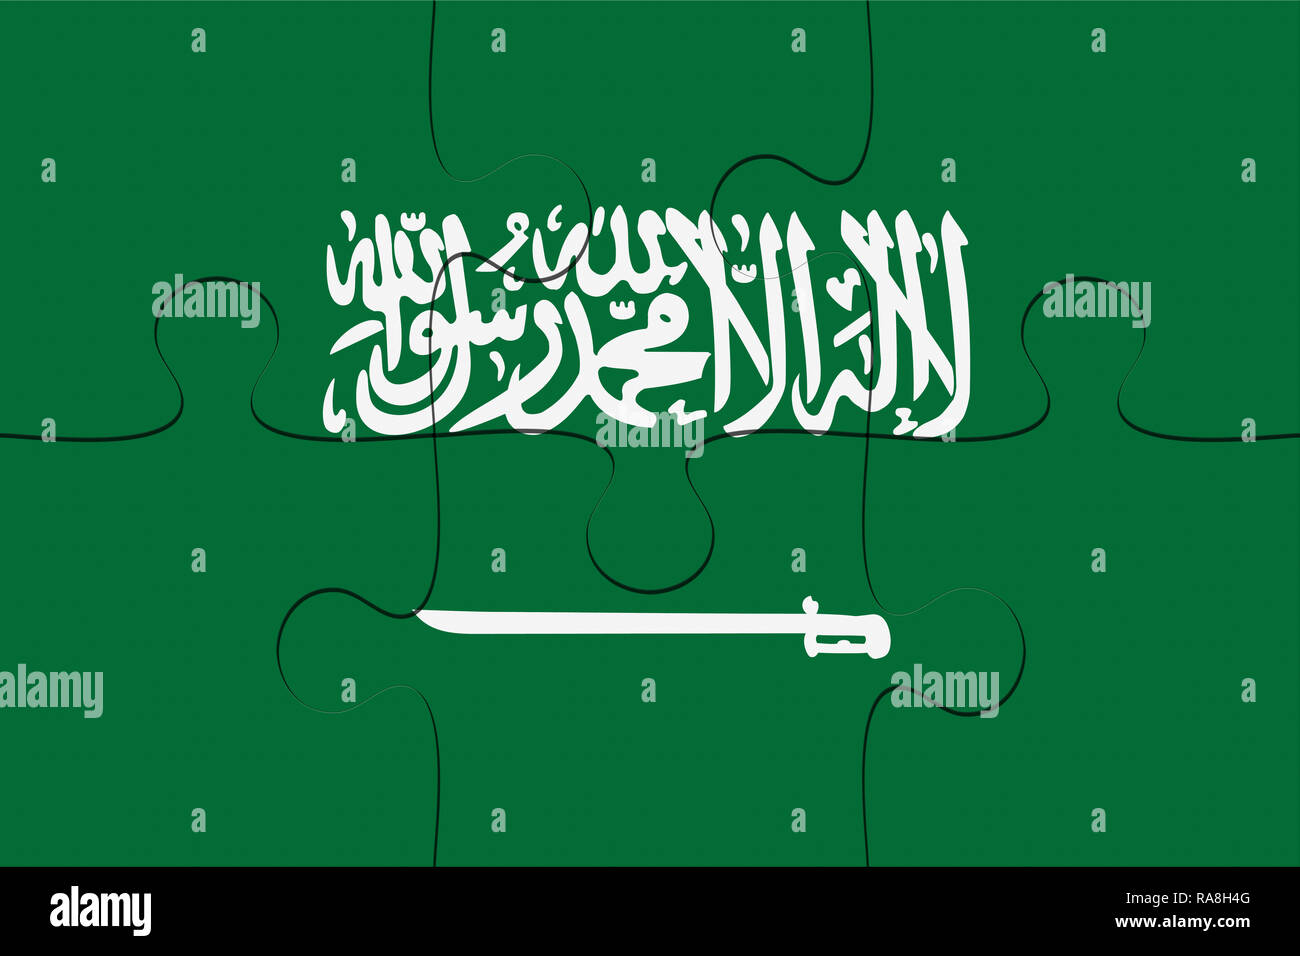 Saudi Arabia Flag Jigsaw Puzzle, 3d illustration background Stock Photo